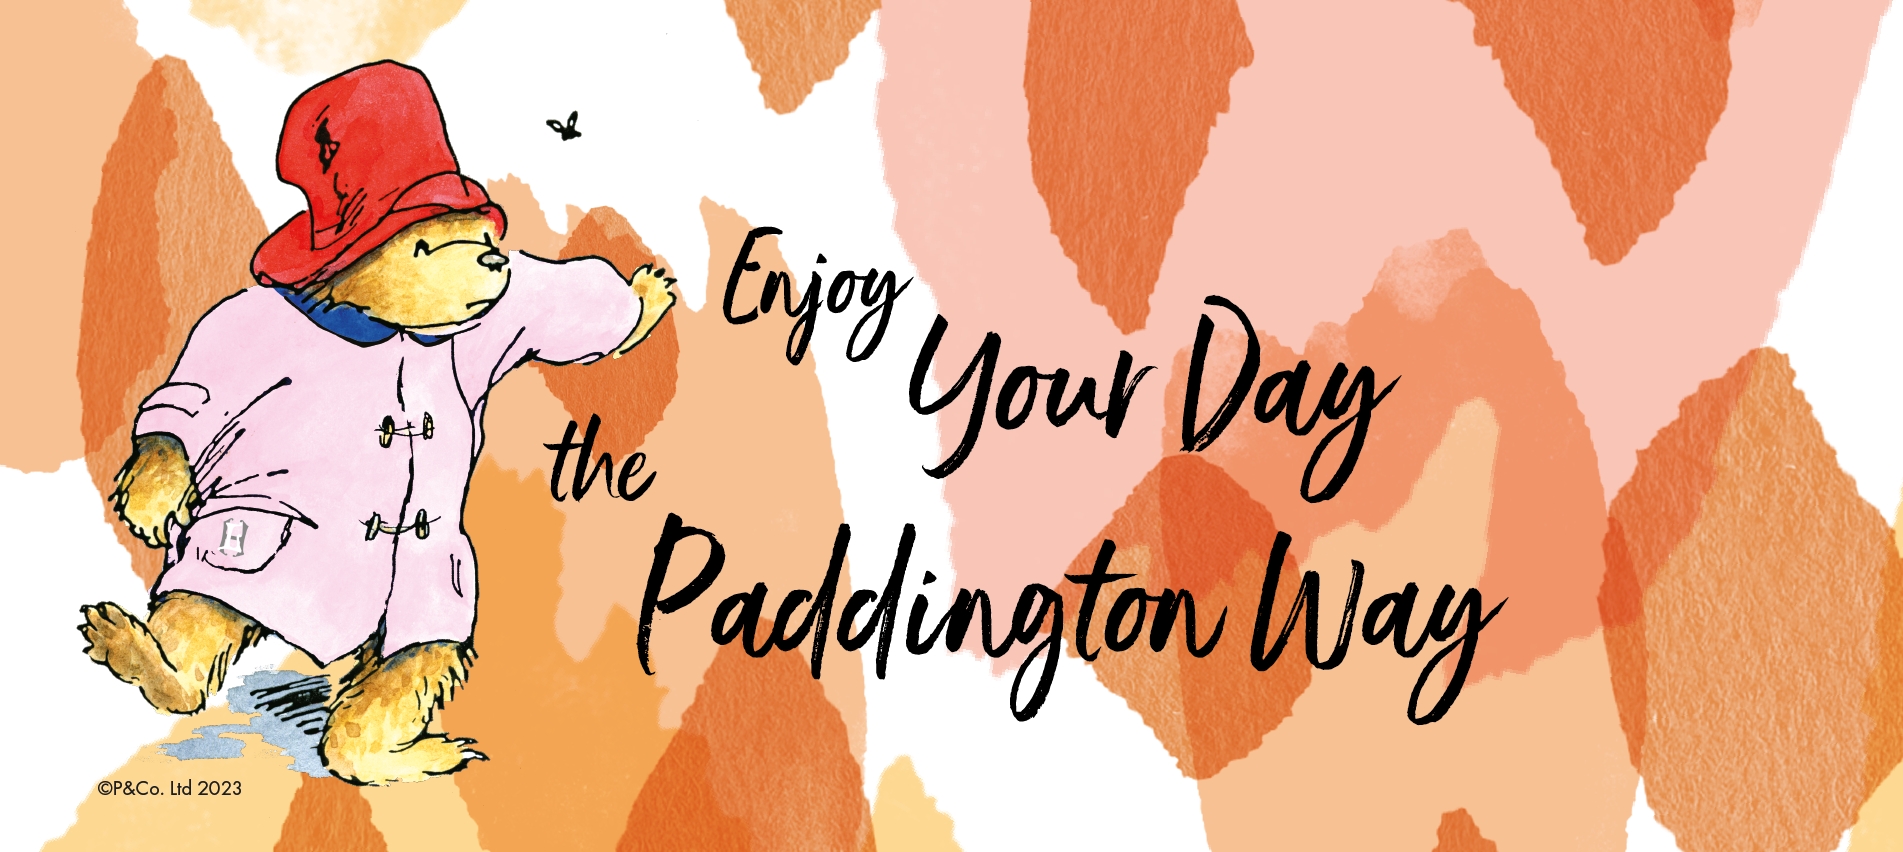 Enjoy Your Day the Paddington Way